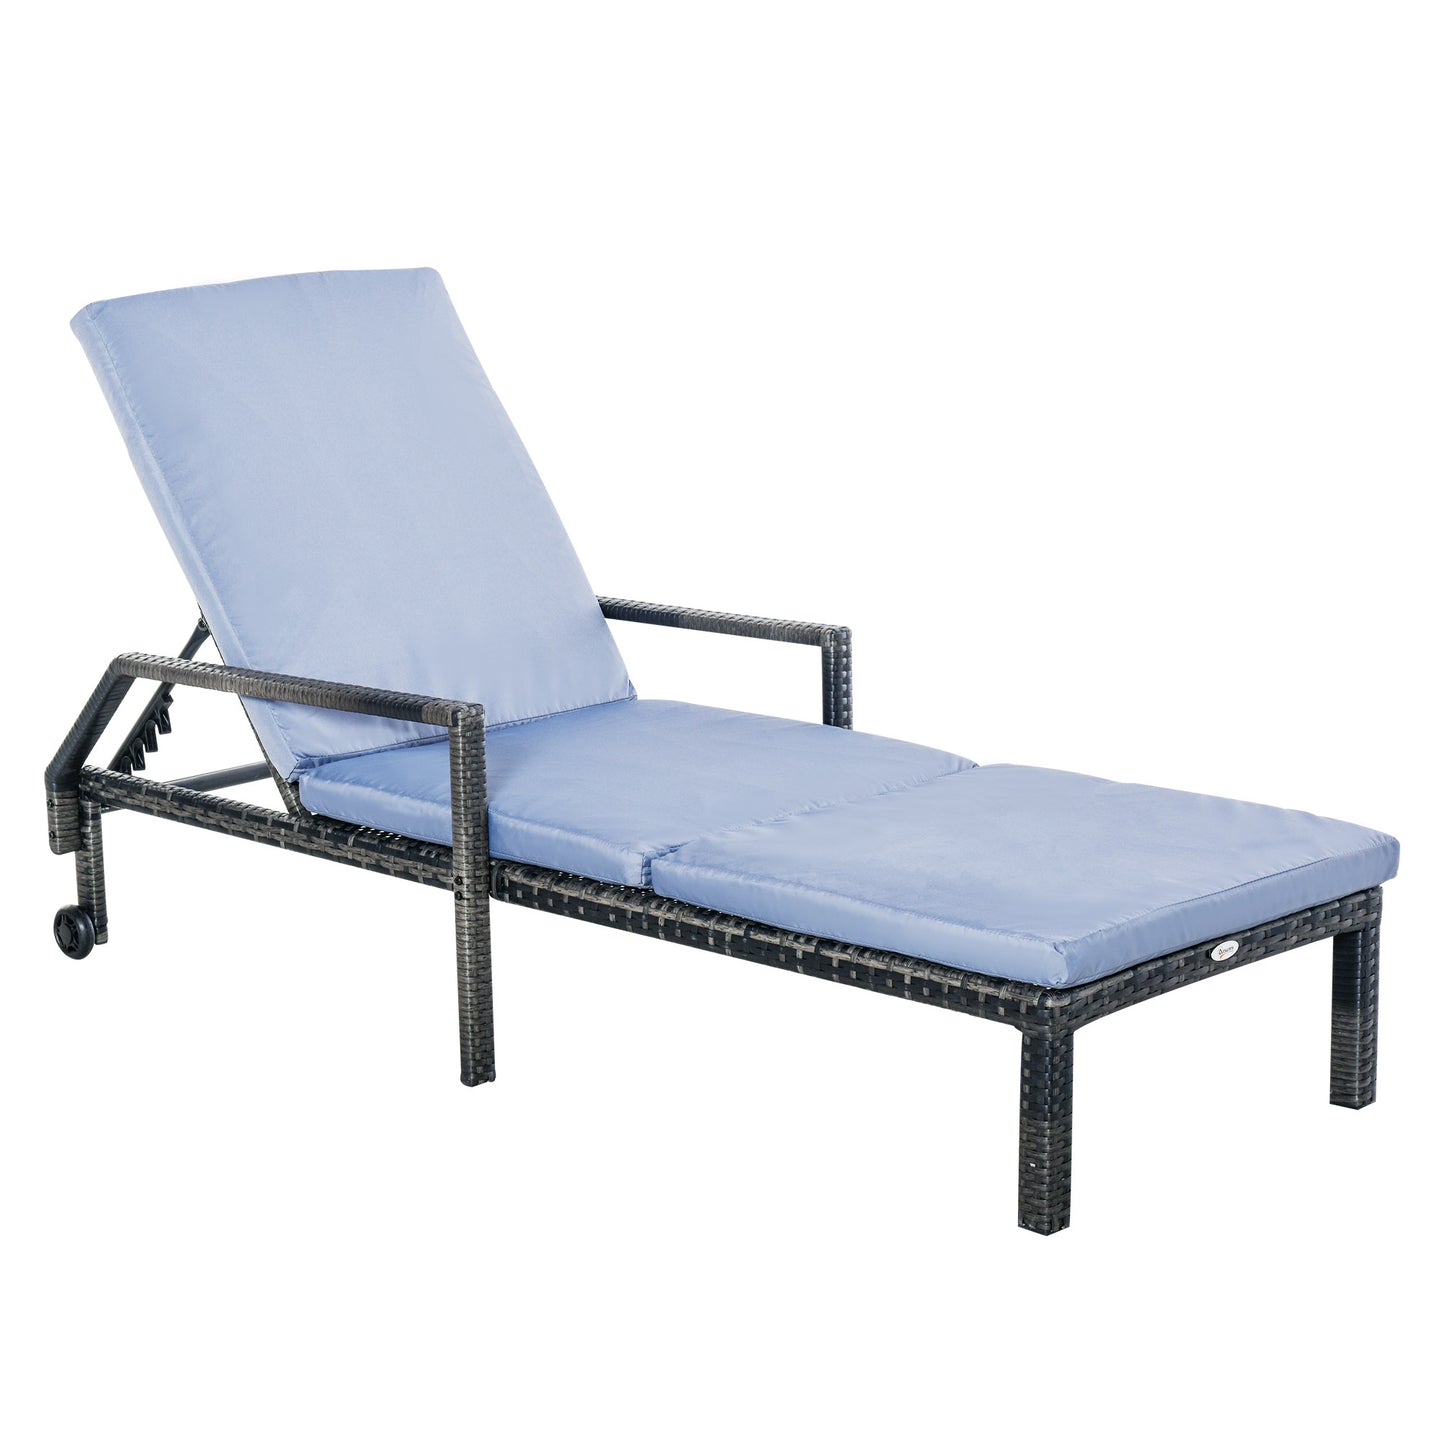 Outsunny Mixed Grey Rattan Sun Lounger Garden Furniture w/ Adjustable Backrest & Wheels